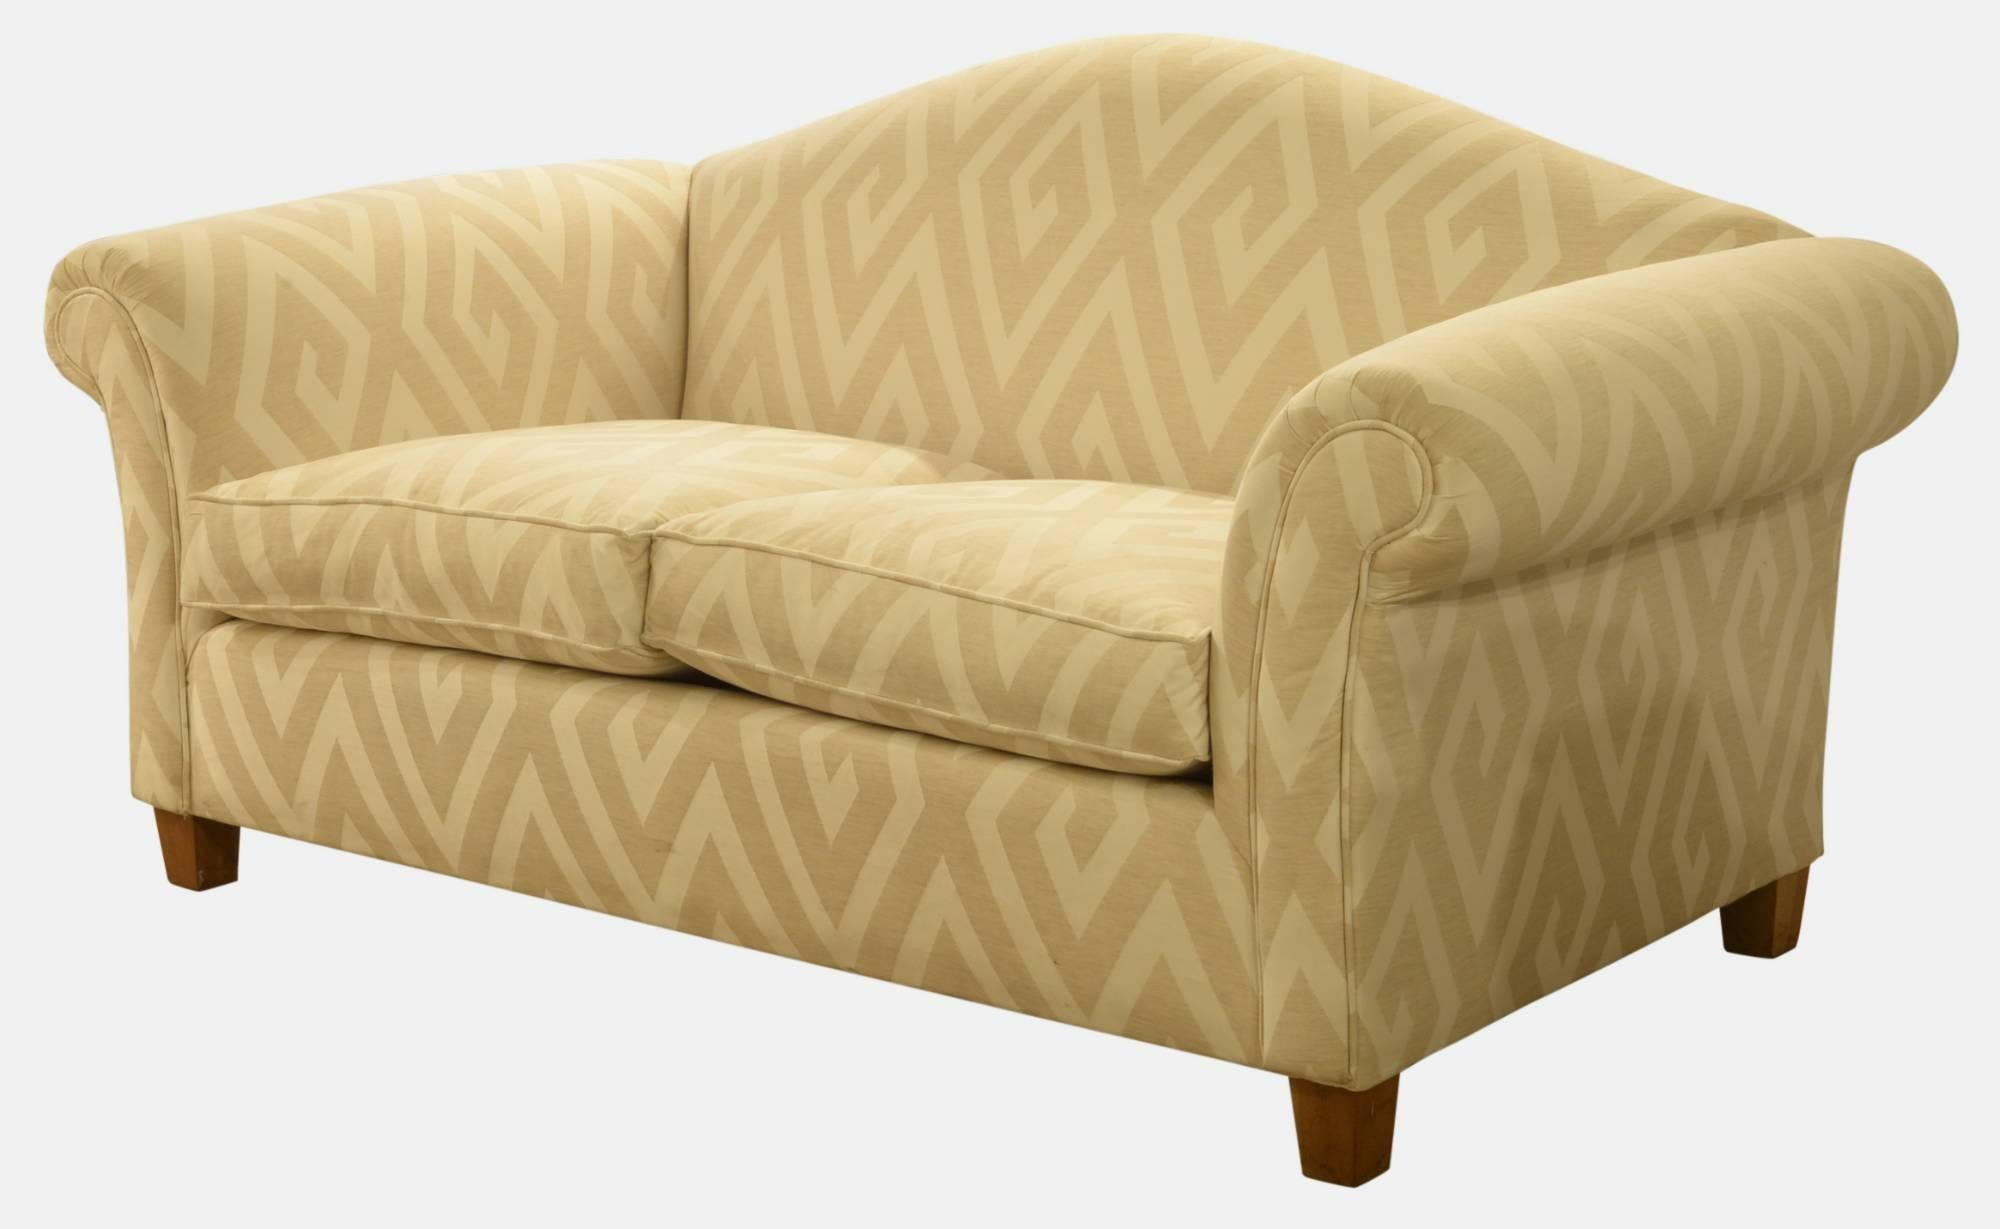 A mid-20th century sofa upholstered in Swedish designer fabric.